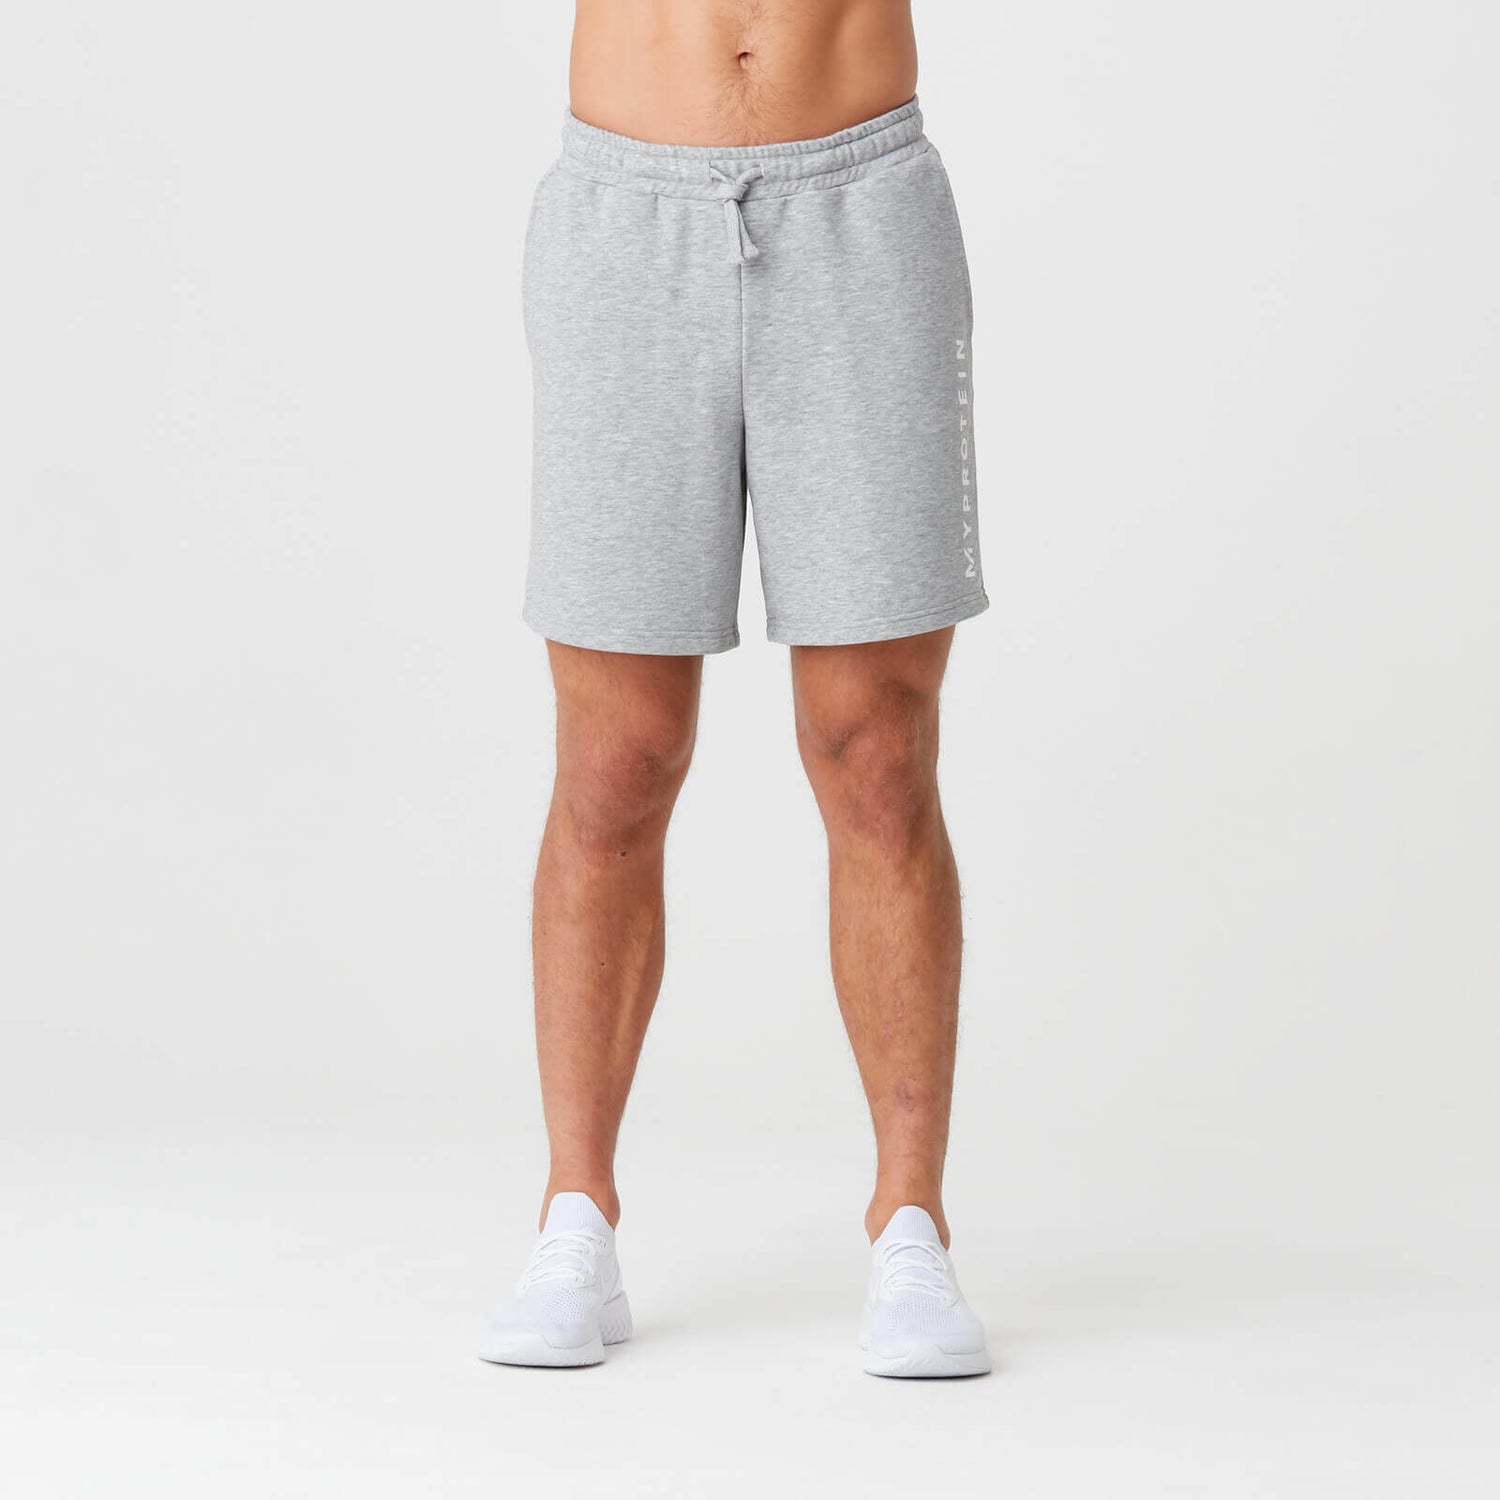 Buy The Original Men's Shorts | Grey Marl | MYPROTEIN™